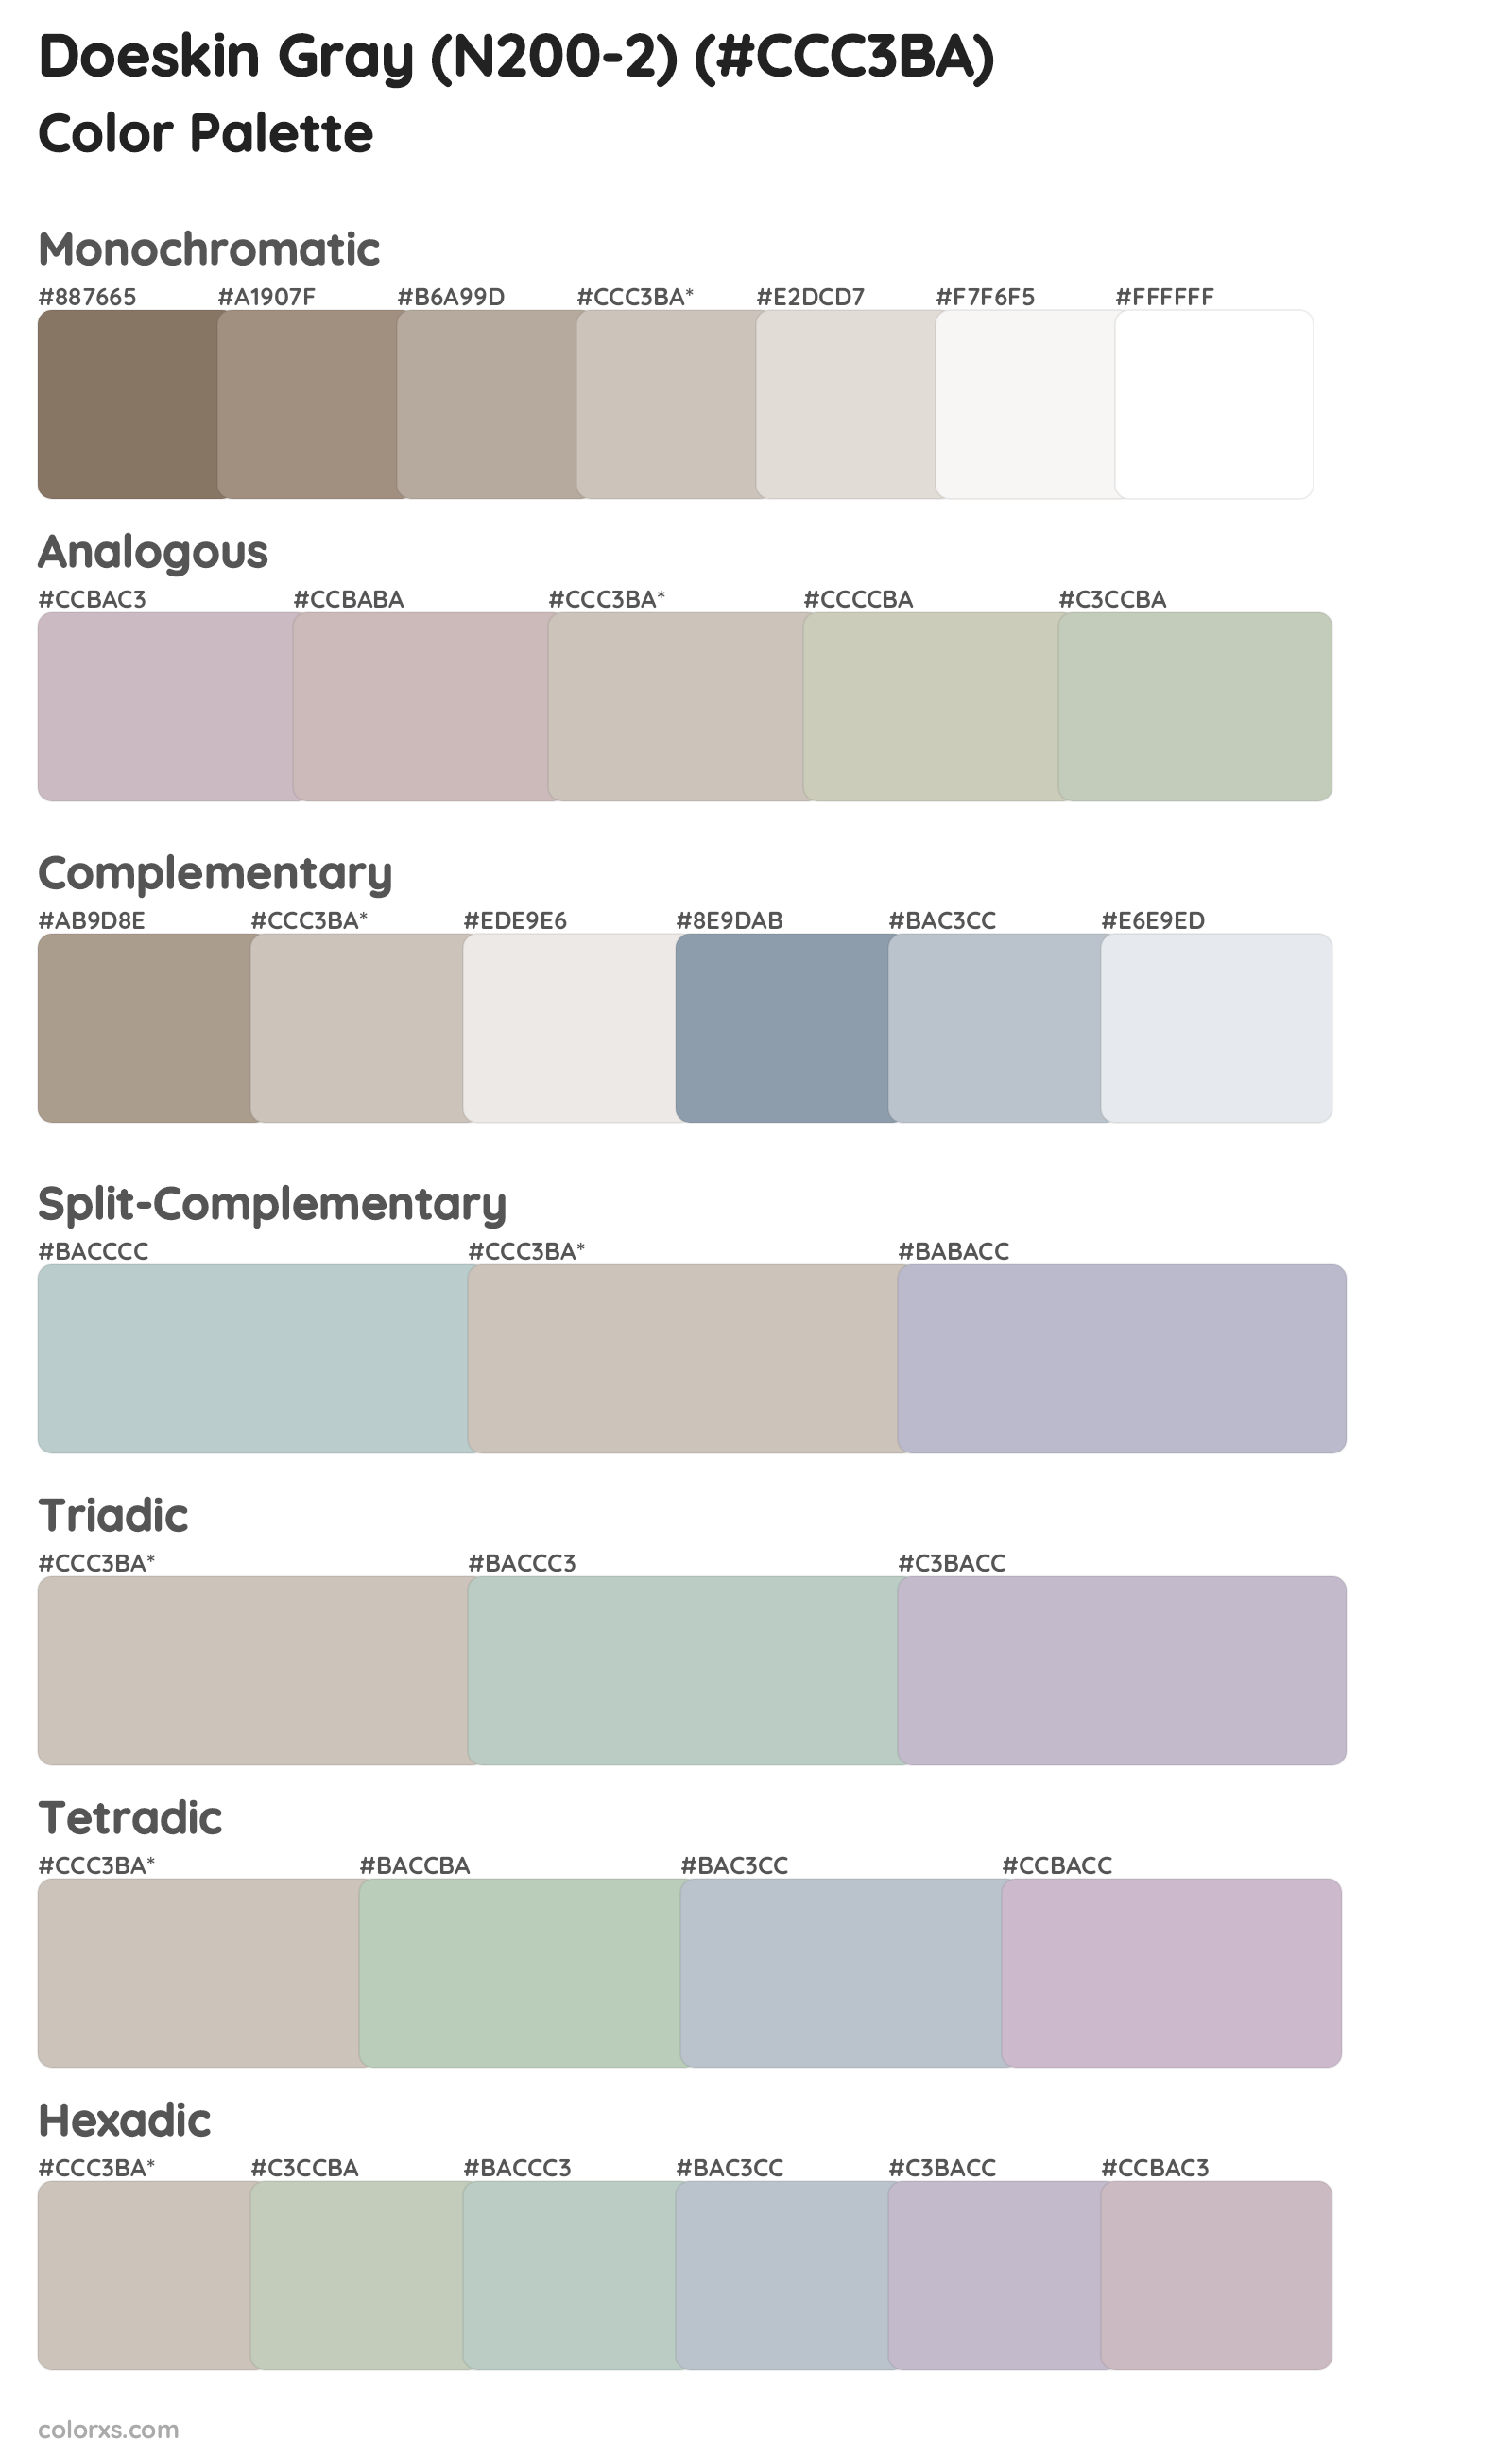 Doeskin Gray (N200-2) Color Scheme Palettes